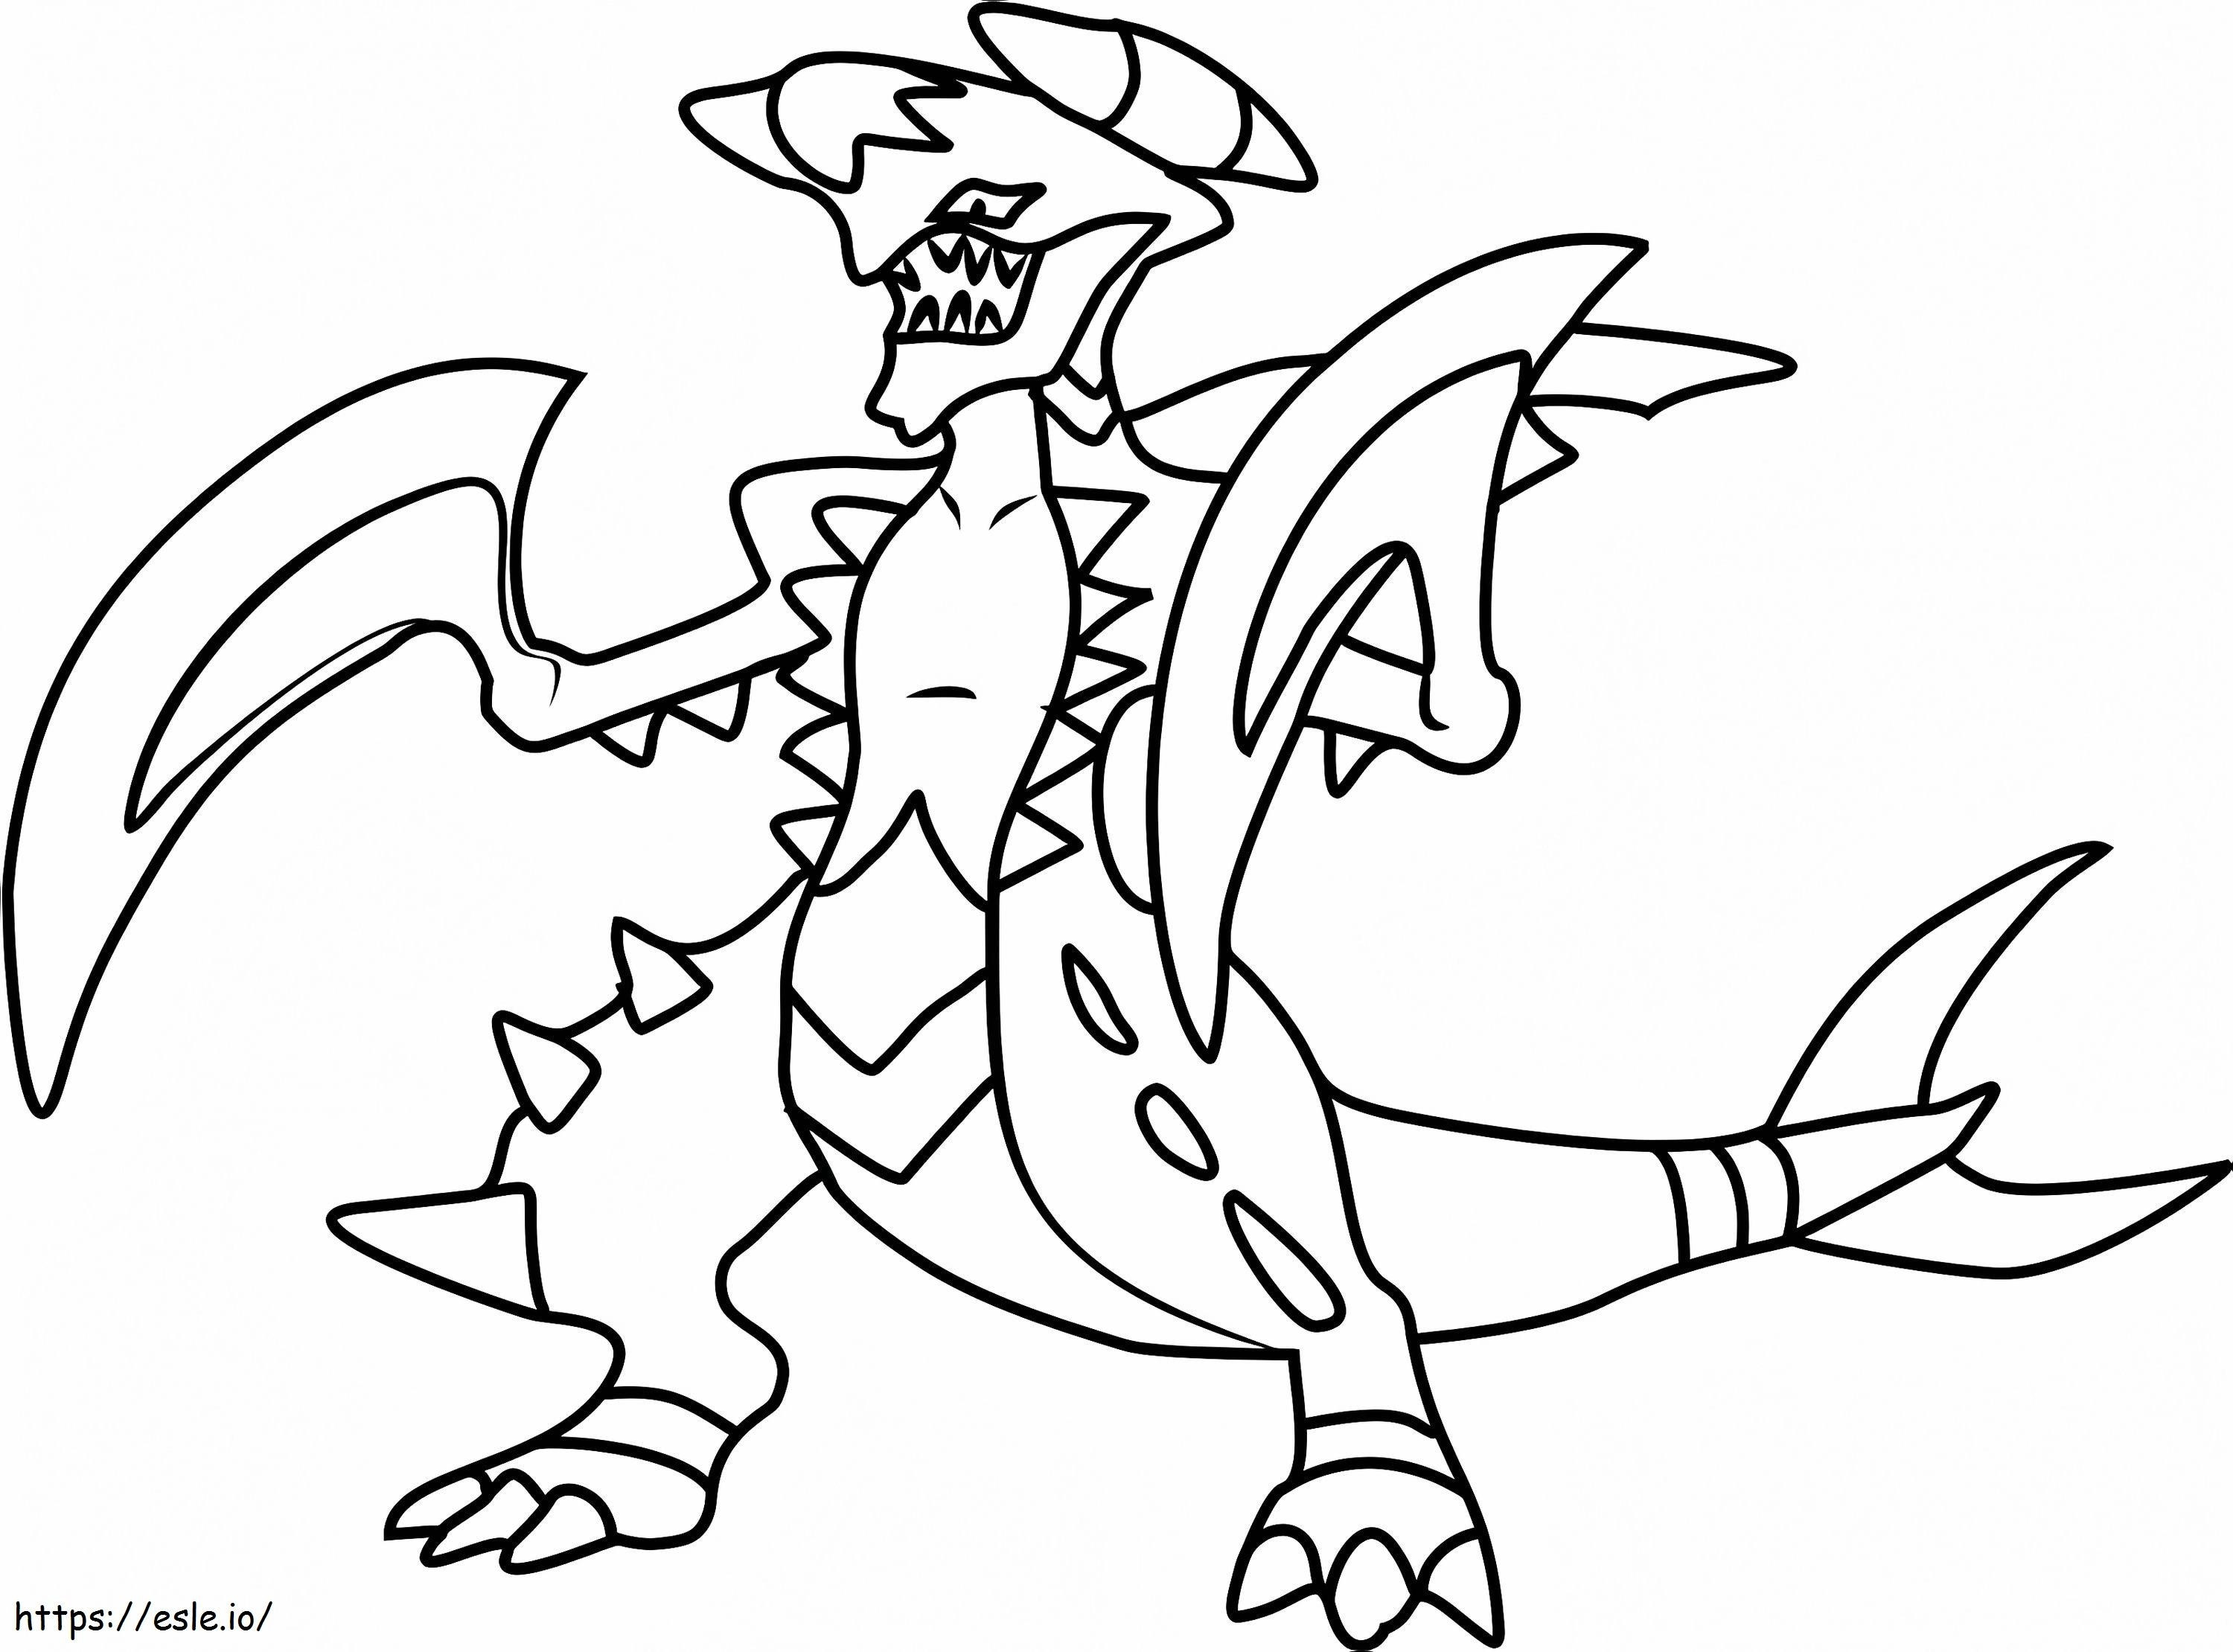  Garchomp Pokémon A4 ausmalbilder